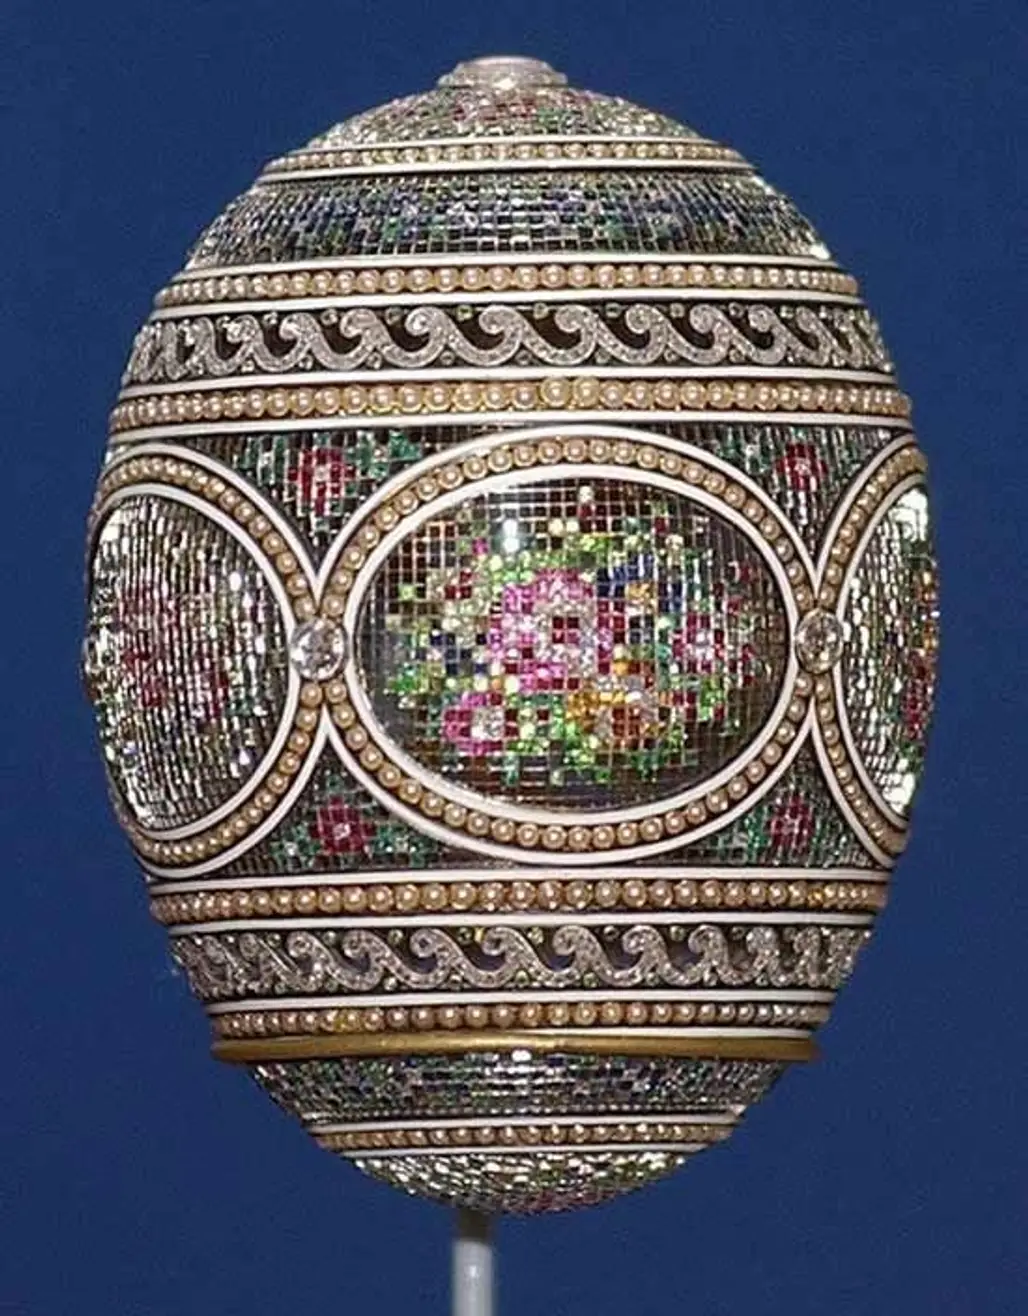 The Mosaic Egg